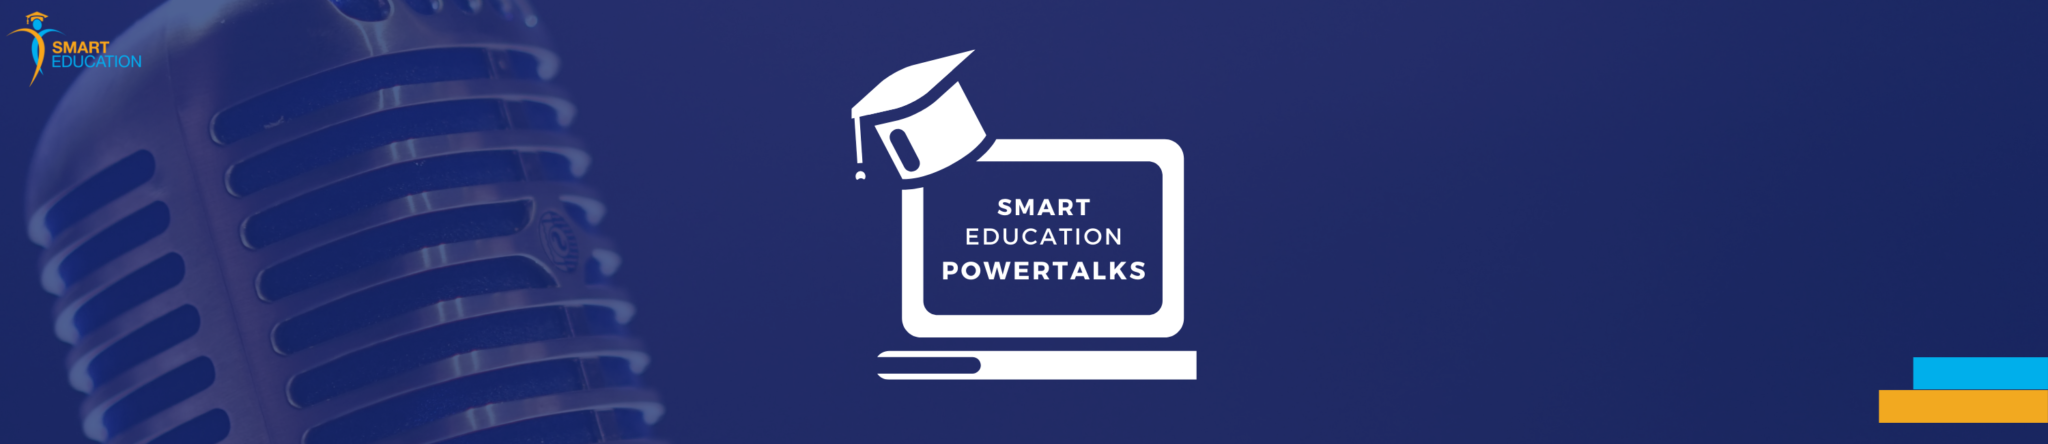 SmartEducation PowerTalks